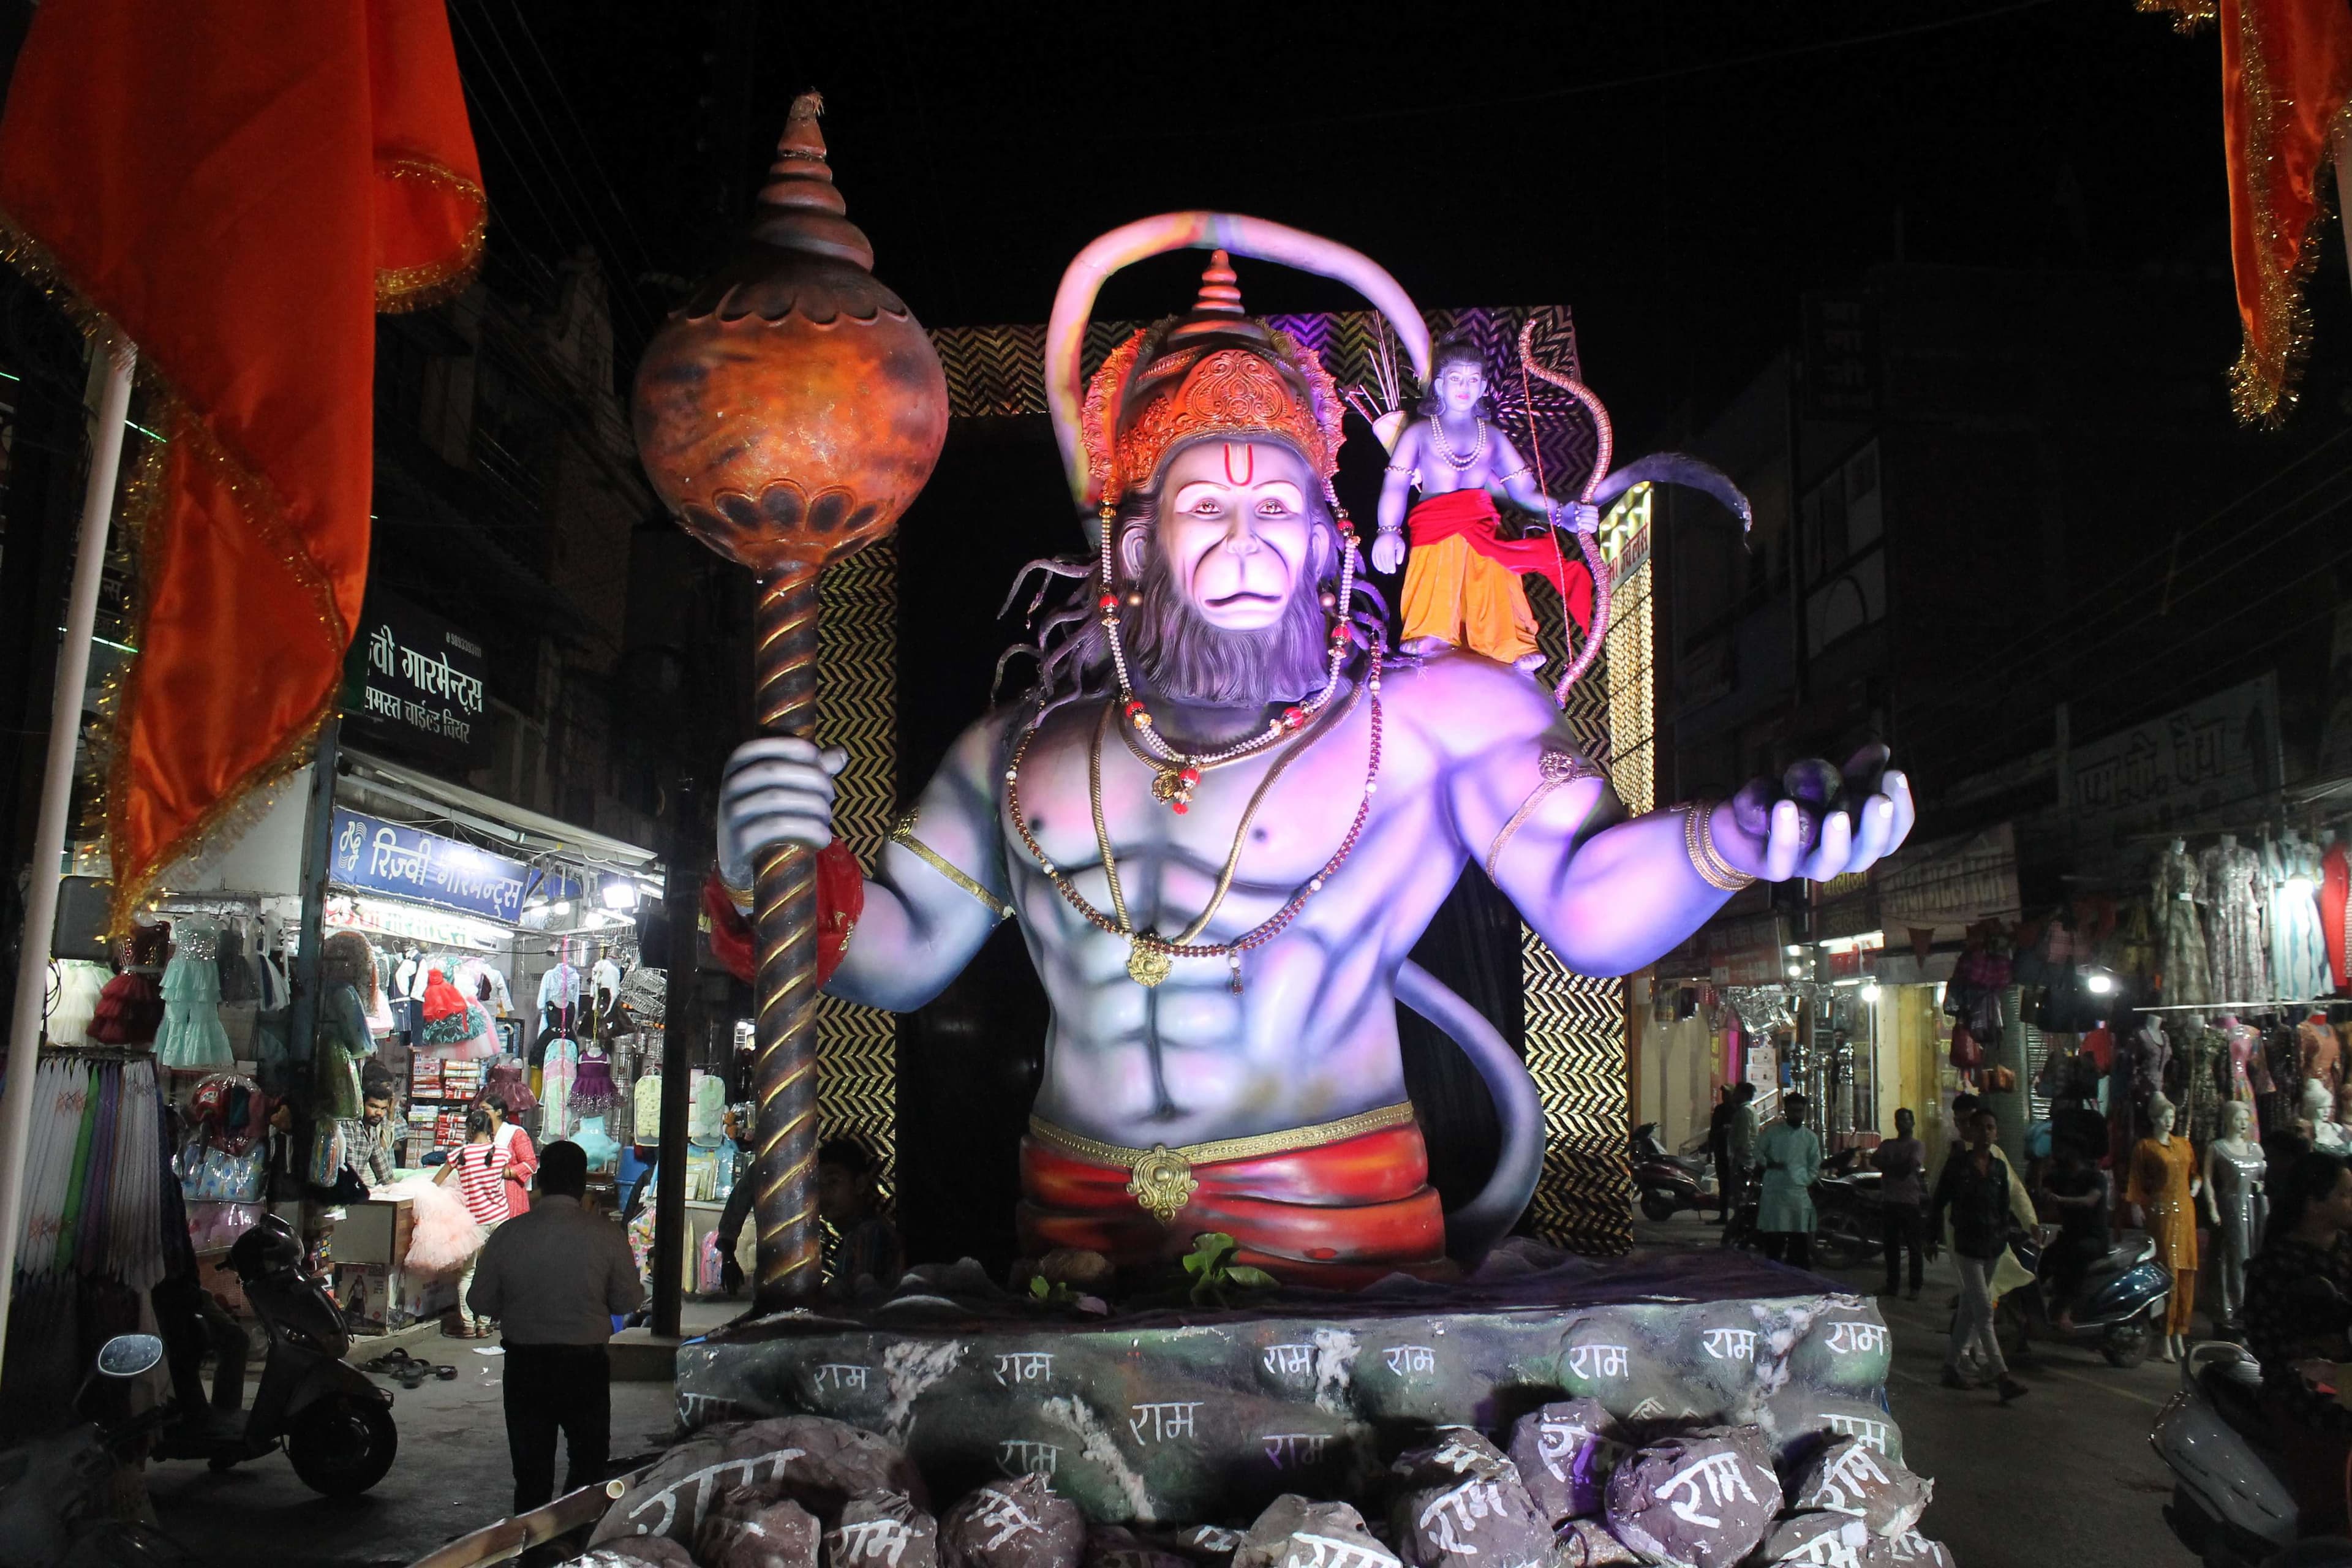 Maratha society celebrated Shivaji's birth anniversary